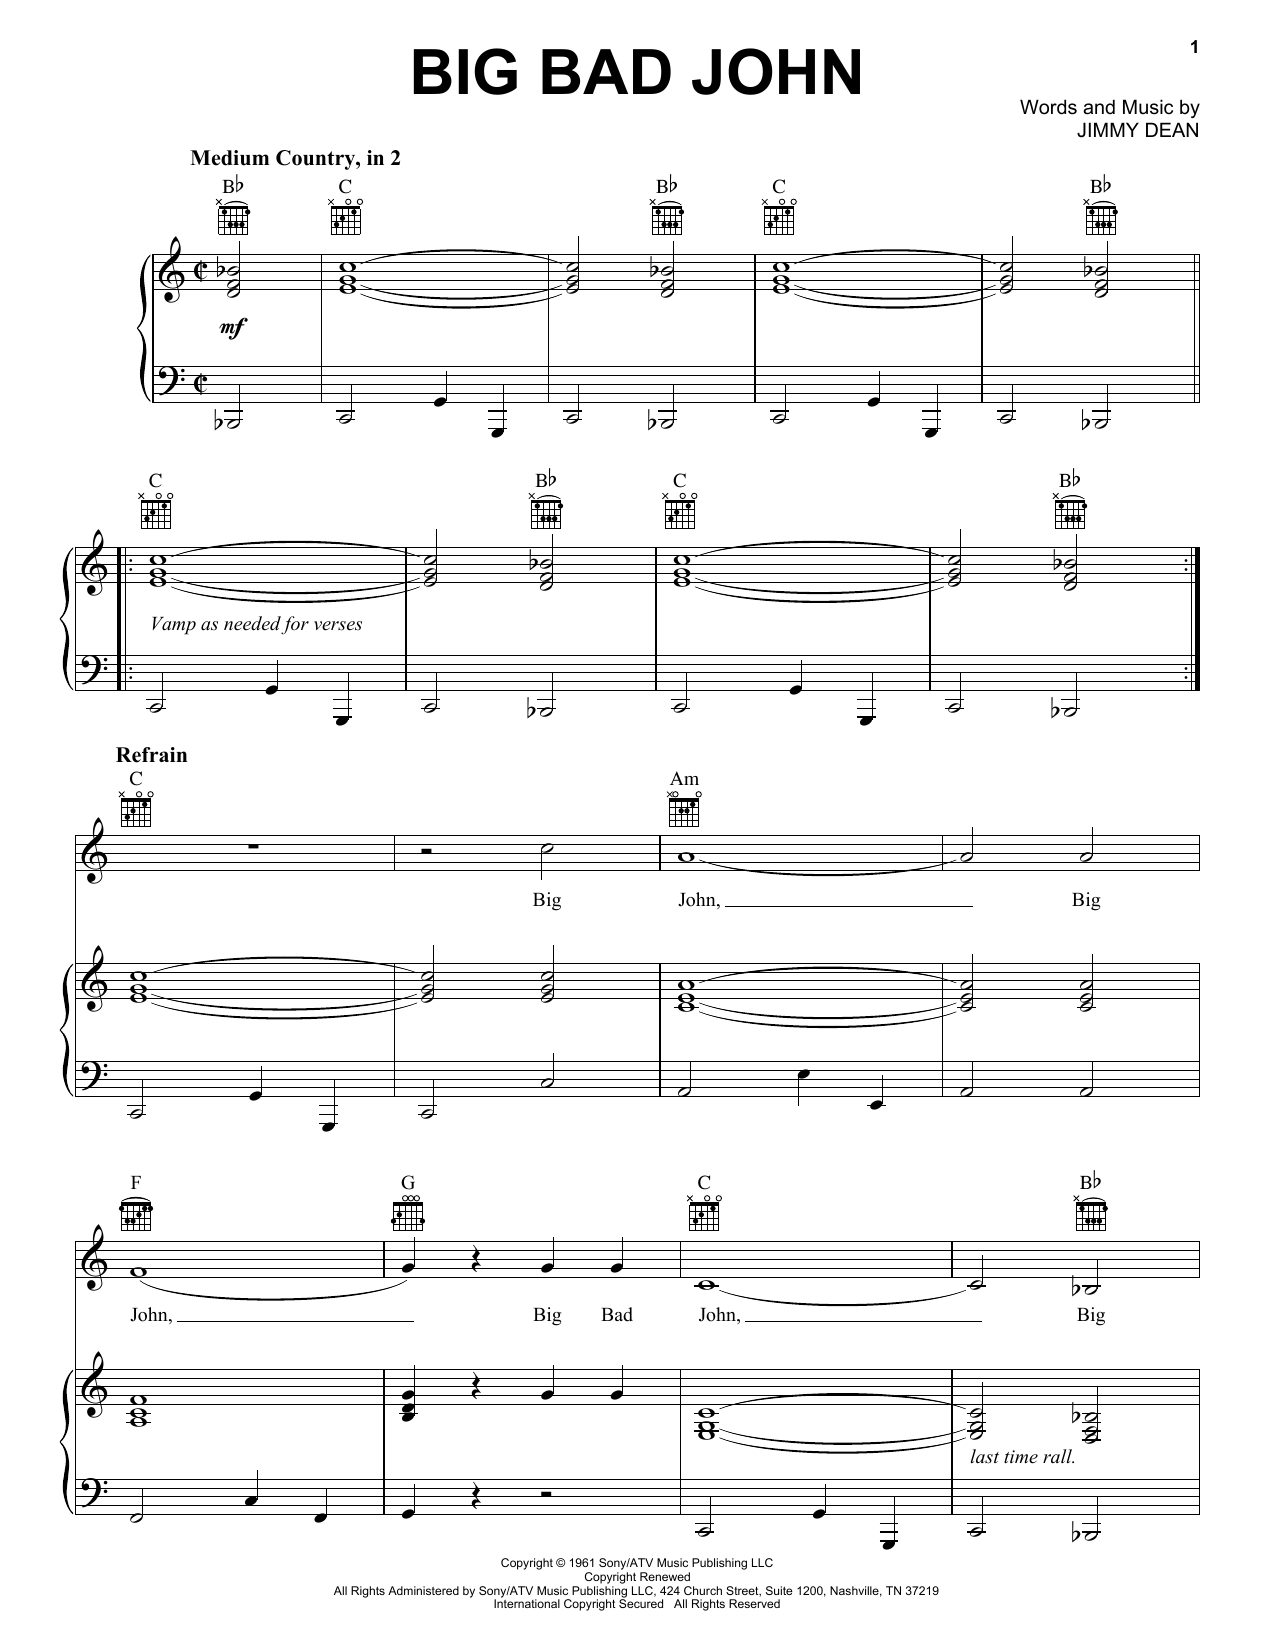 Jimmy Dean Big Bad John Sheet Music Notes & Chords for Melody Line, Lyrics & Chords - Download or Print PDF